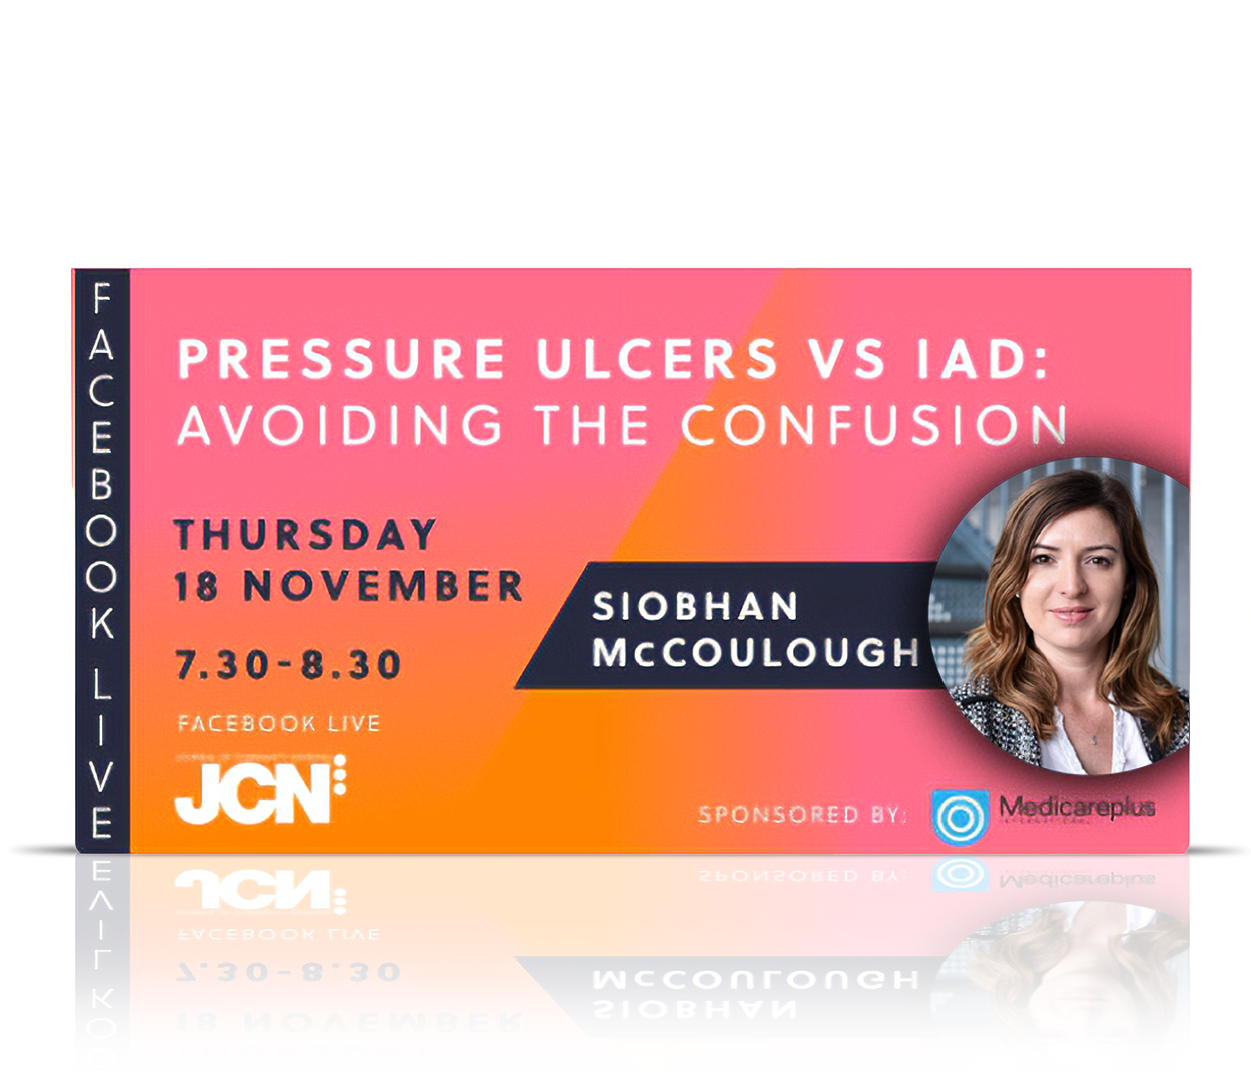 Facebook Live: Pressure ulcers vs IAD: avoiding the confusion